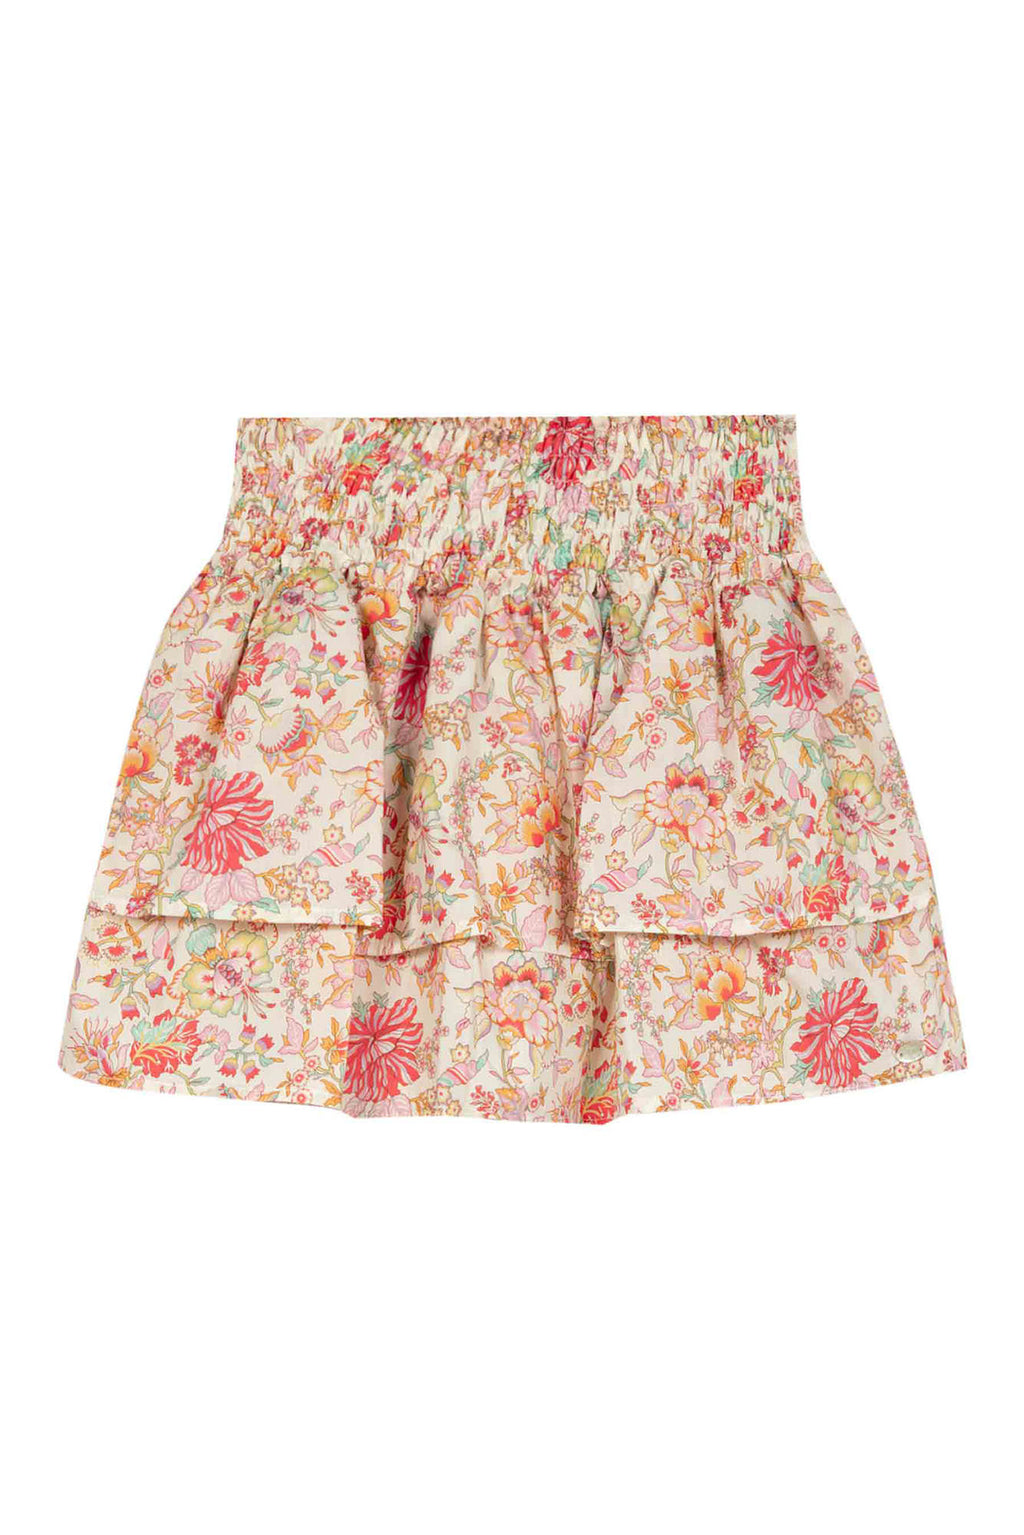 Skirt - Cotton fabric Liberty peony